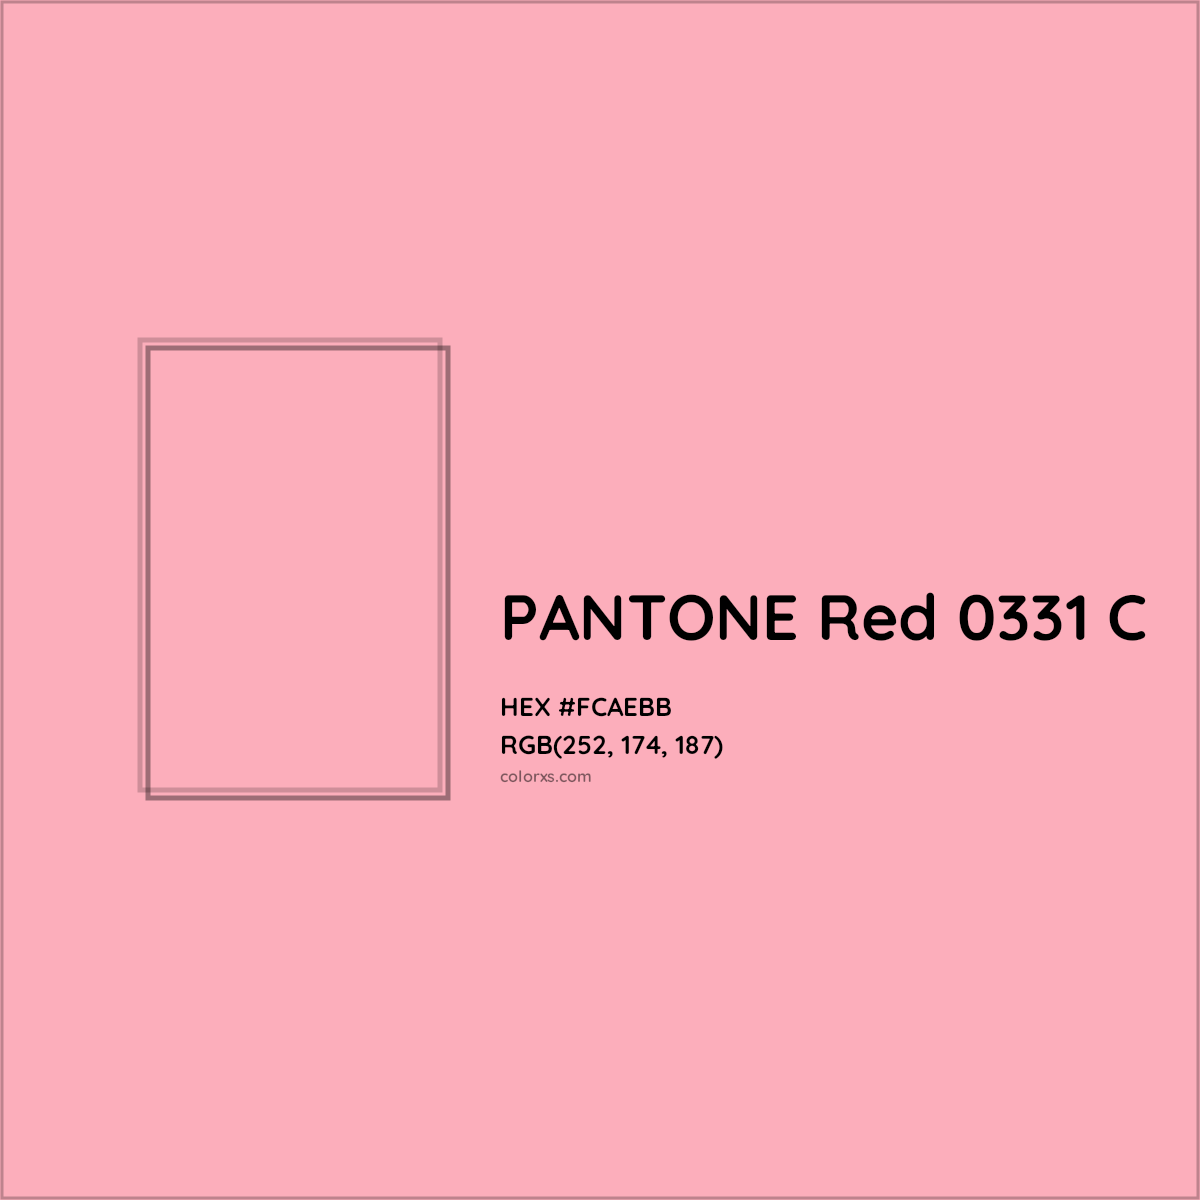 About Pantone Red 0331 C Color Color Codes Similar Colors And Paints